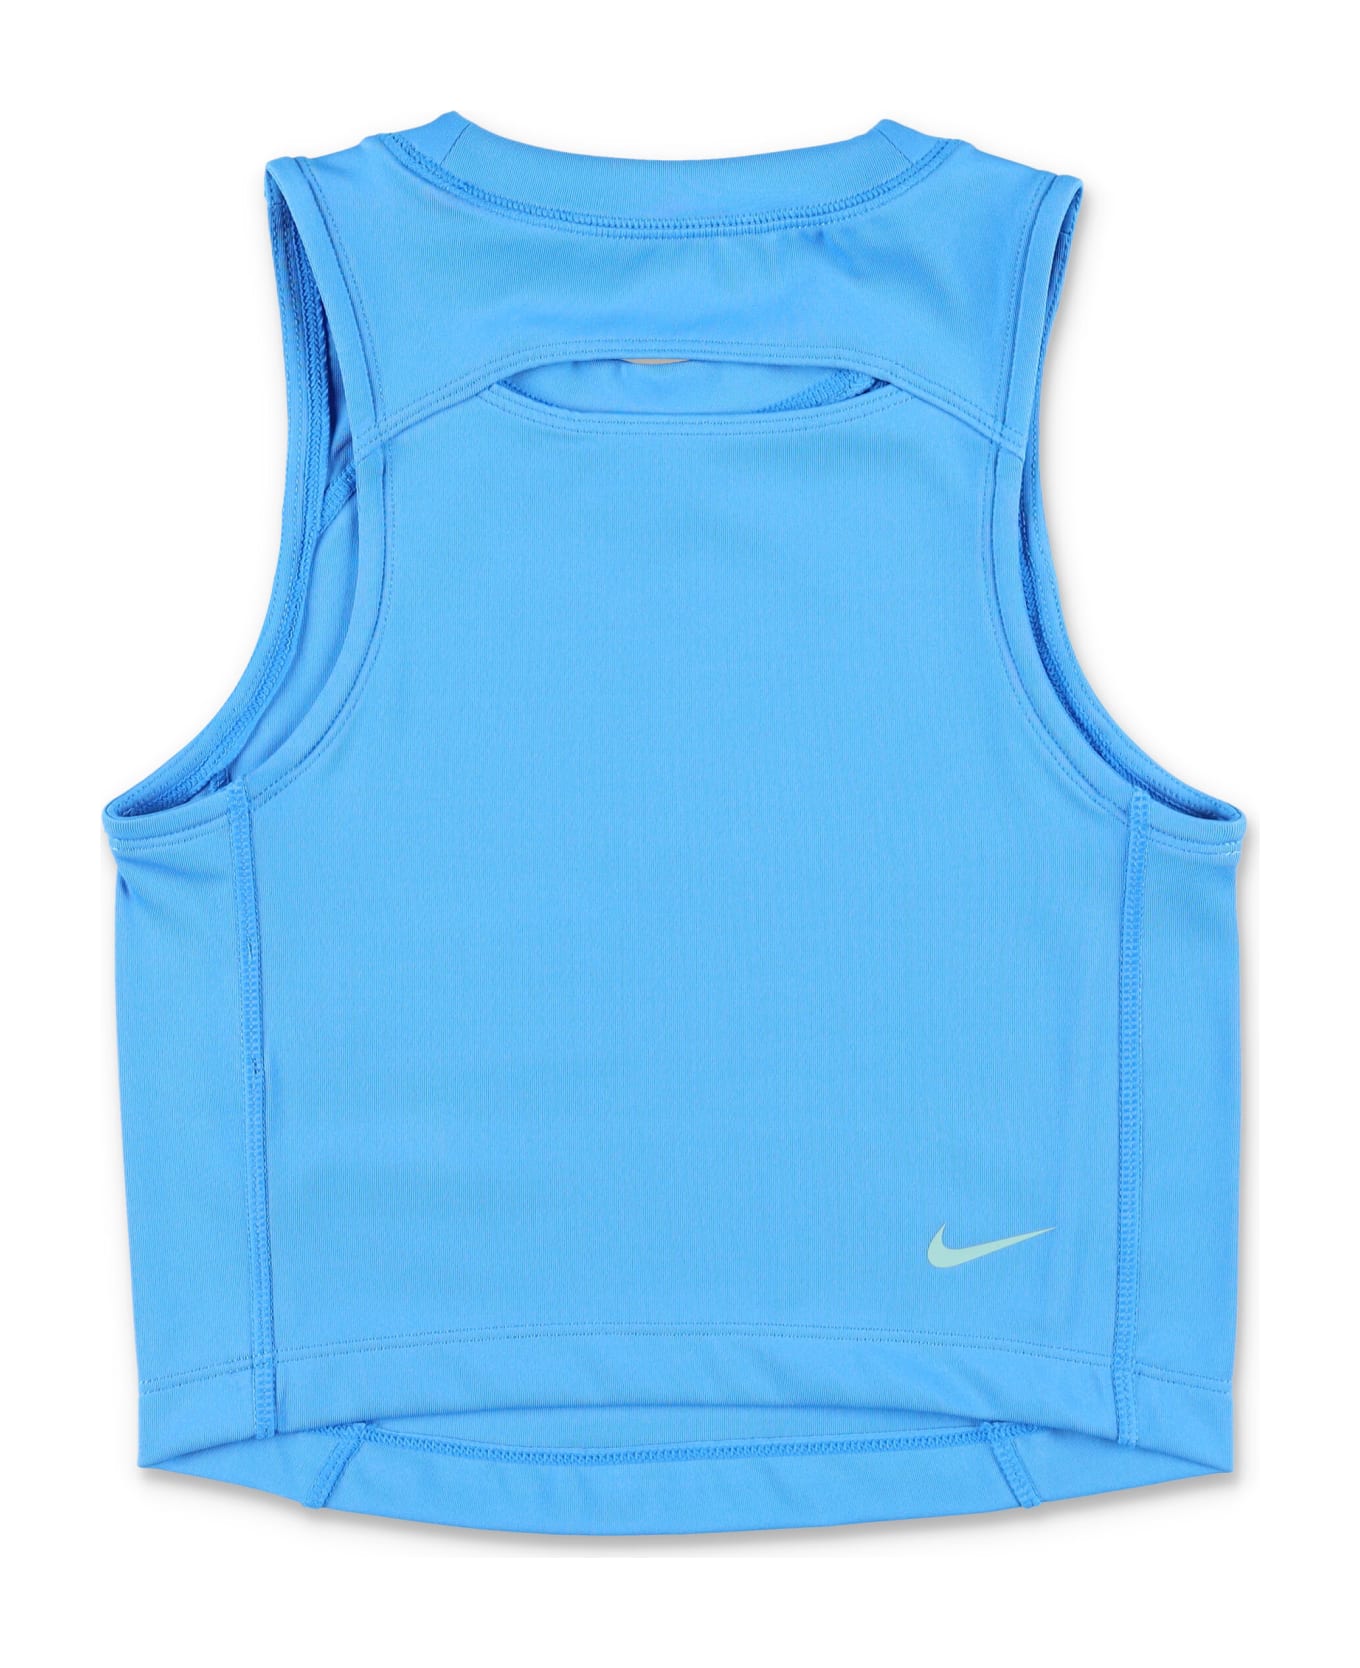 Nike Acg Tank Top - BLUE